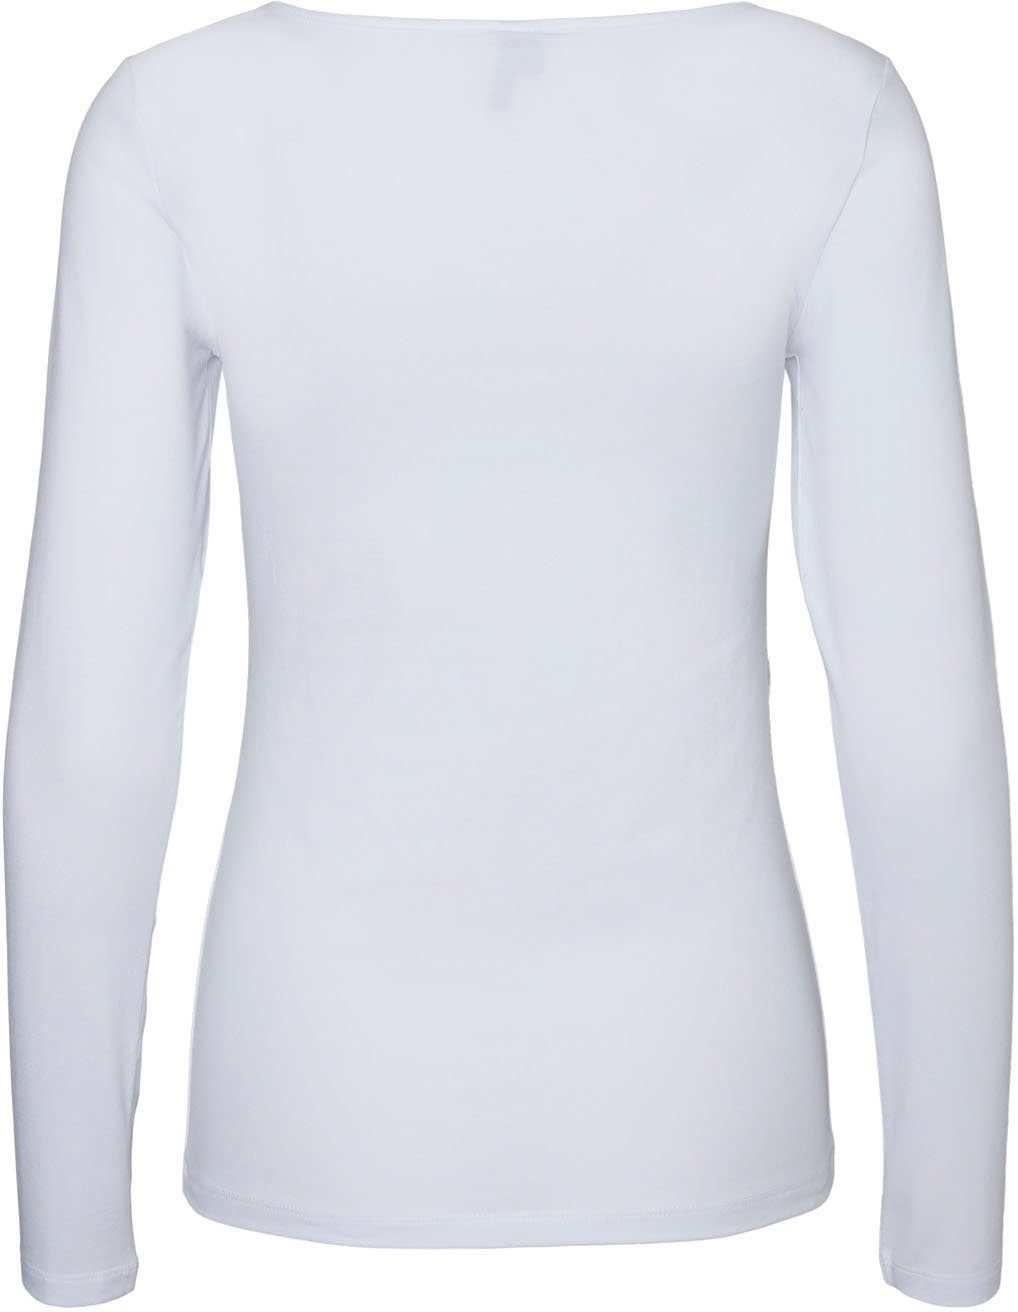 Vero Moda Langarmshirt VMMAXI Bio-Baumwolle white bright aus